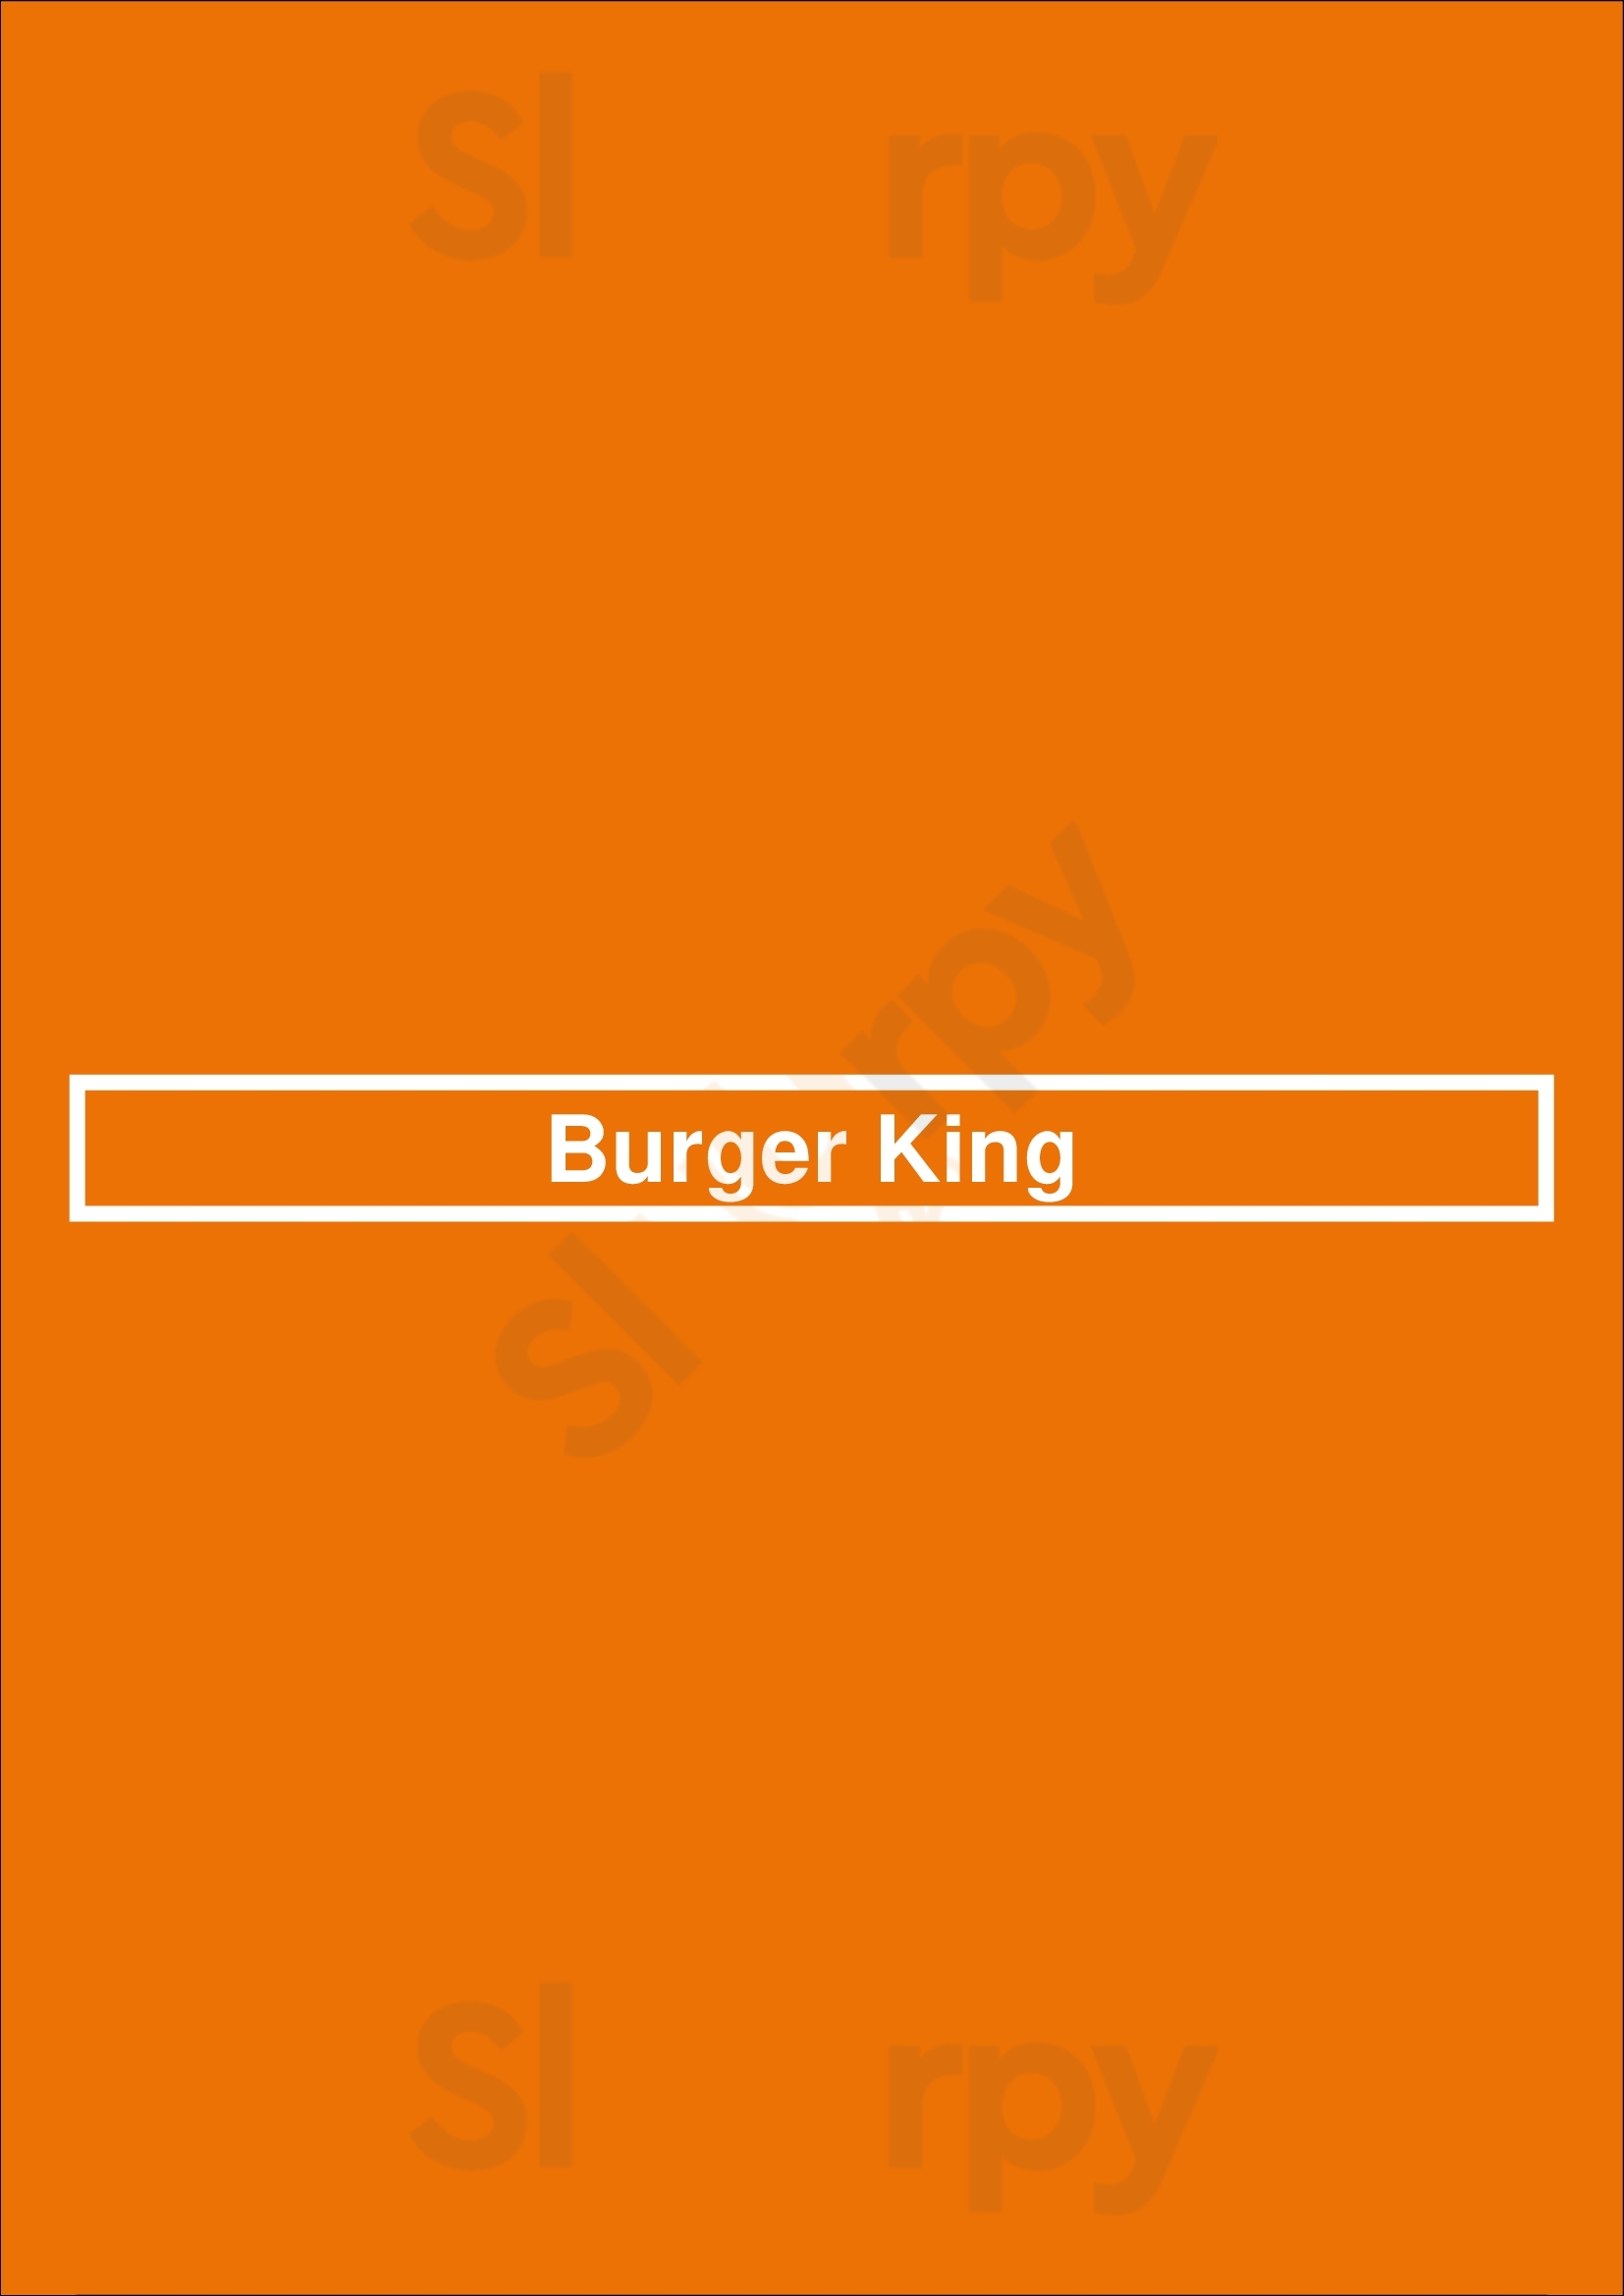 Burger King Rockford Menu - 1